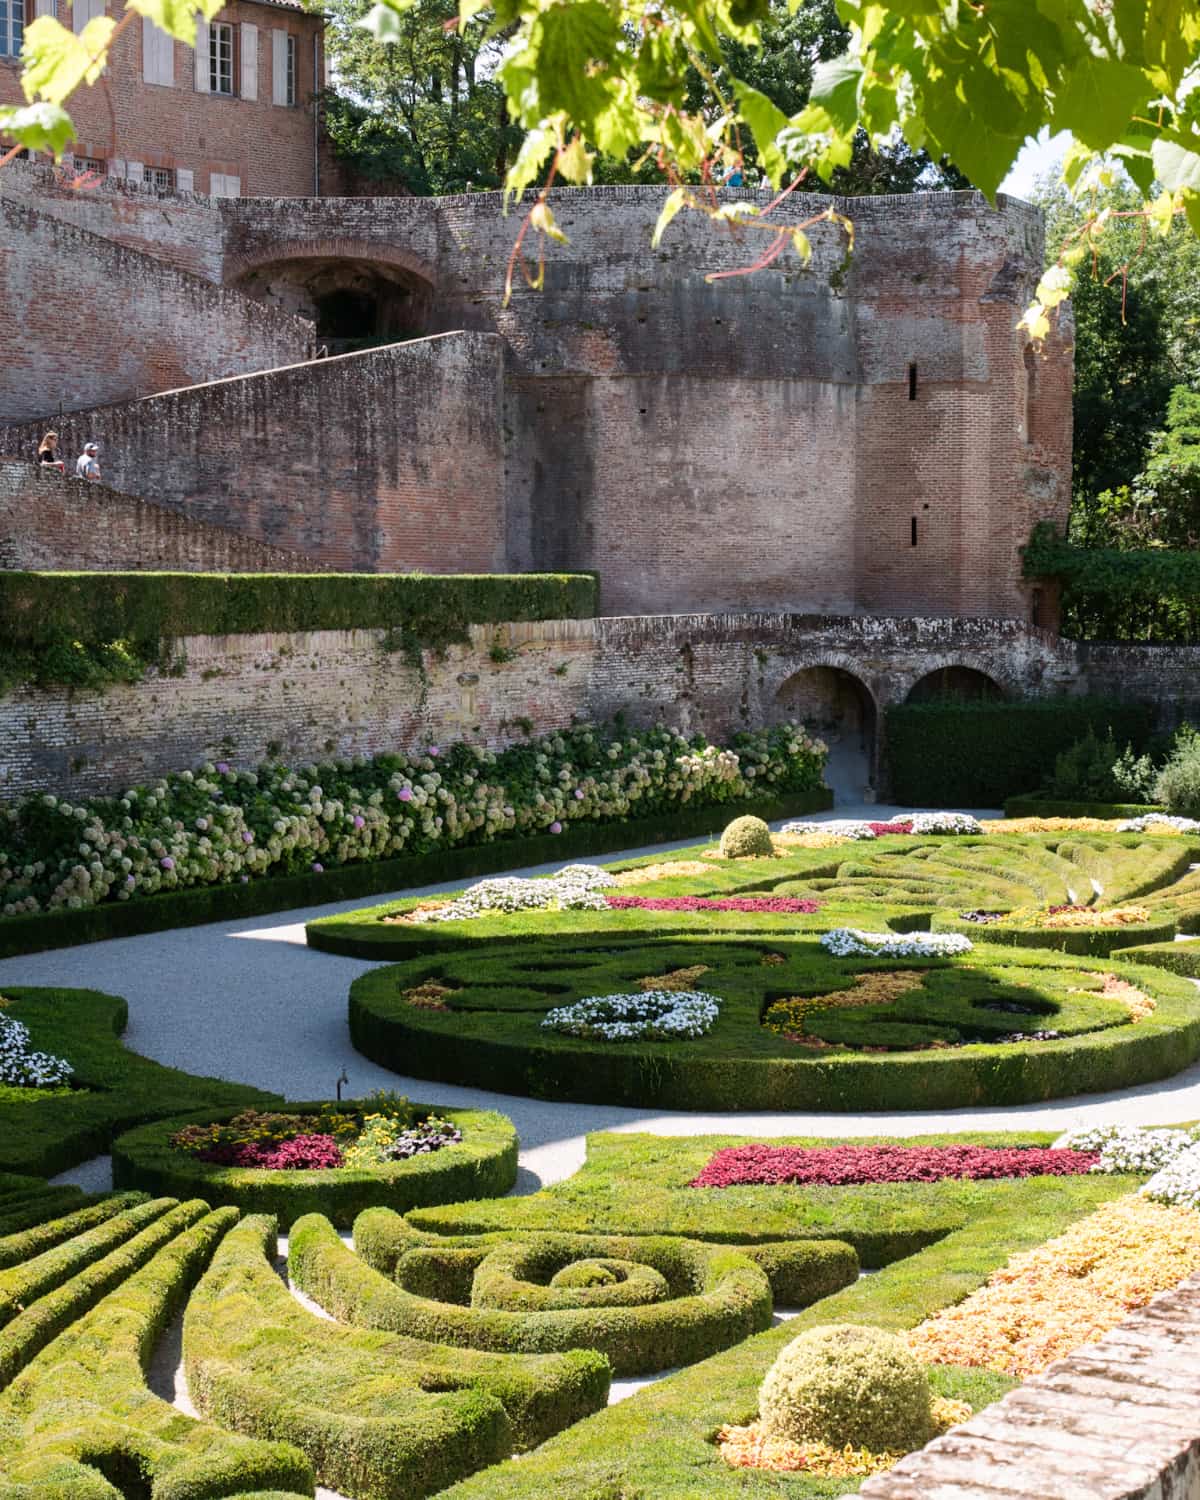 Gardens of Palais de la Berbie, Albi, France with a view of the palace